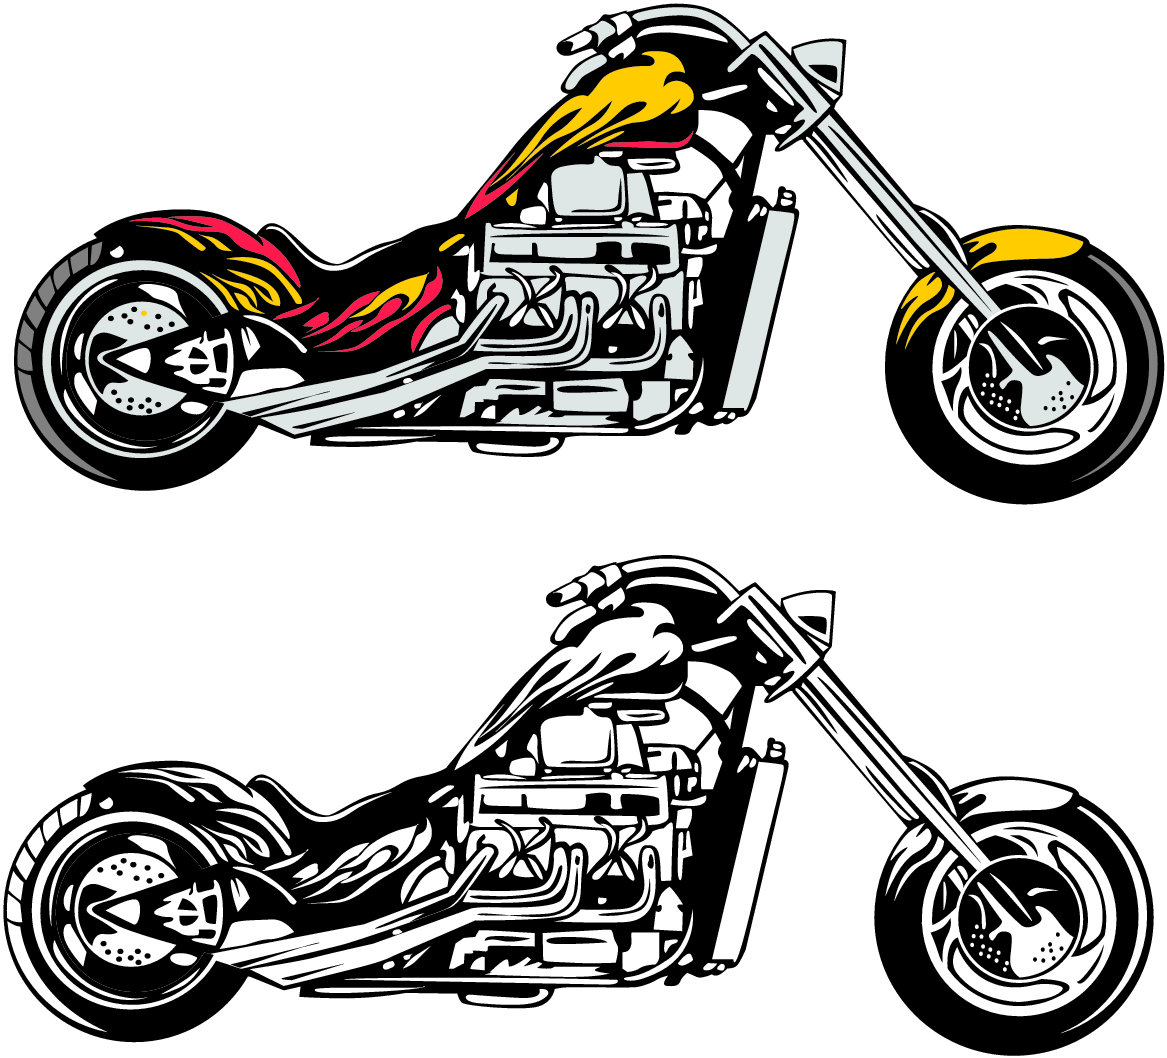 Motorcycle Chopper Clipart Widescreen 2 Hd Wallpapers - 2 Motorcycle Clipart - HD Wallpaper 